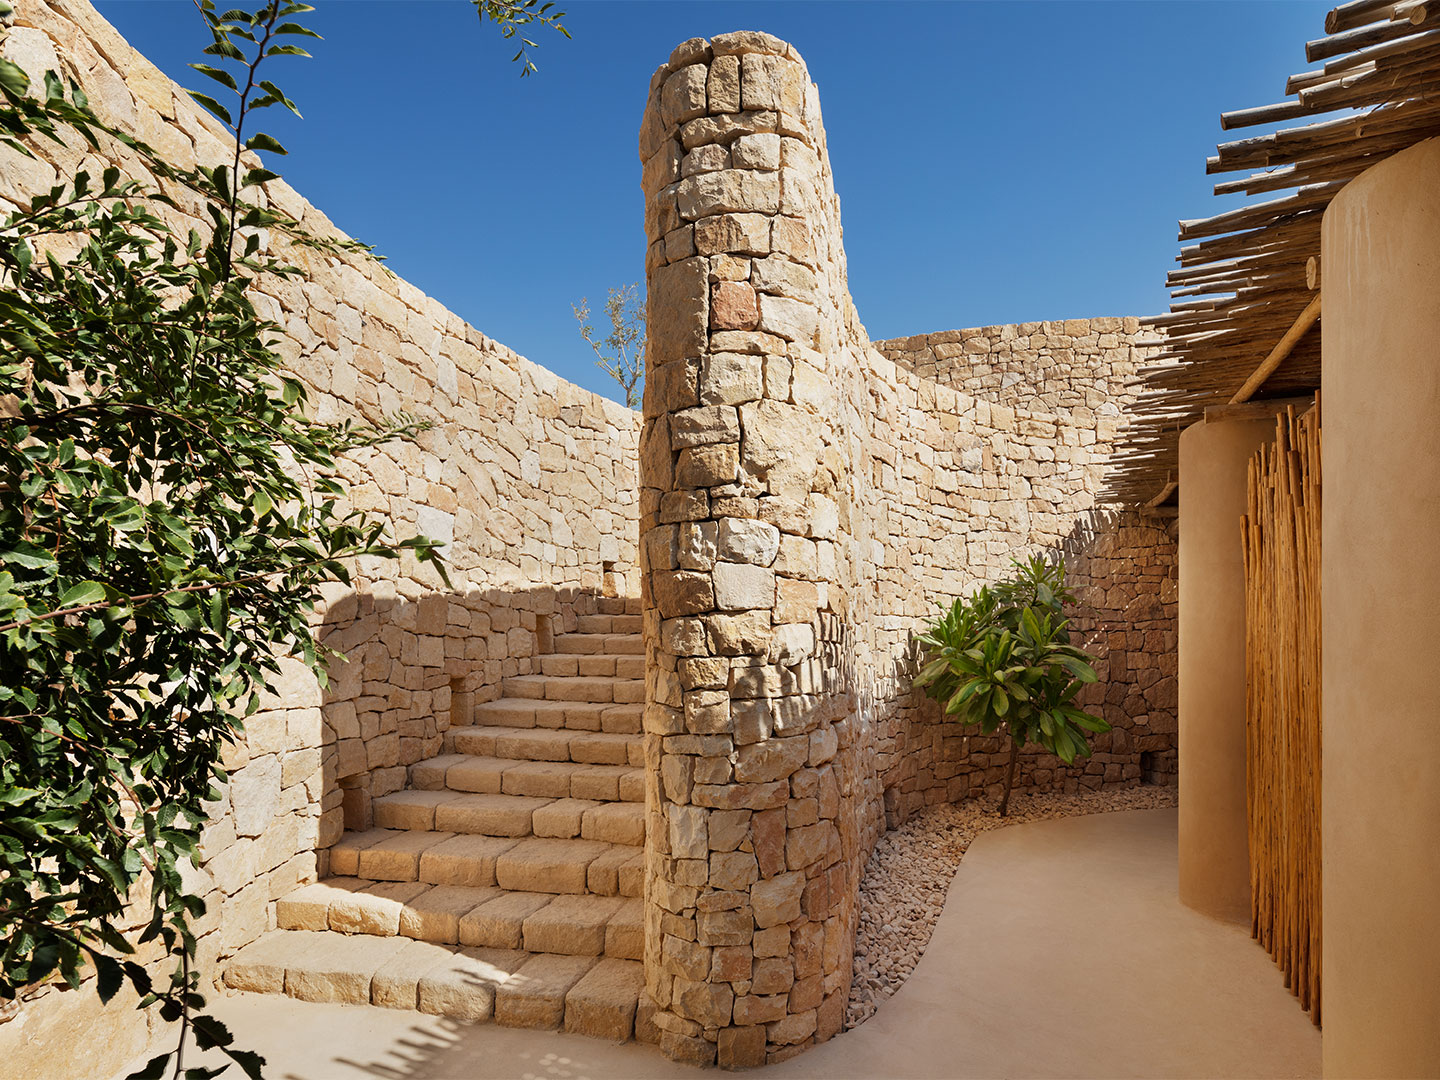 Limestone walls in Israel